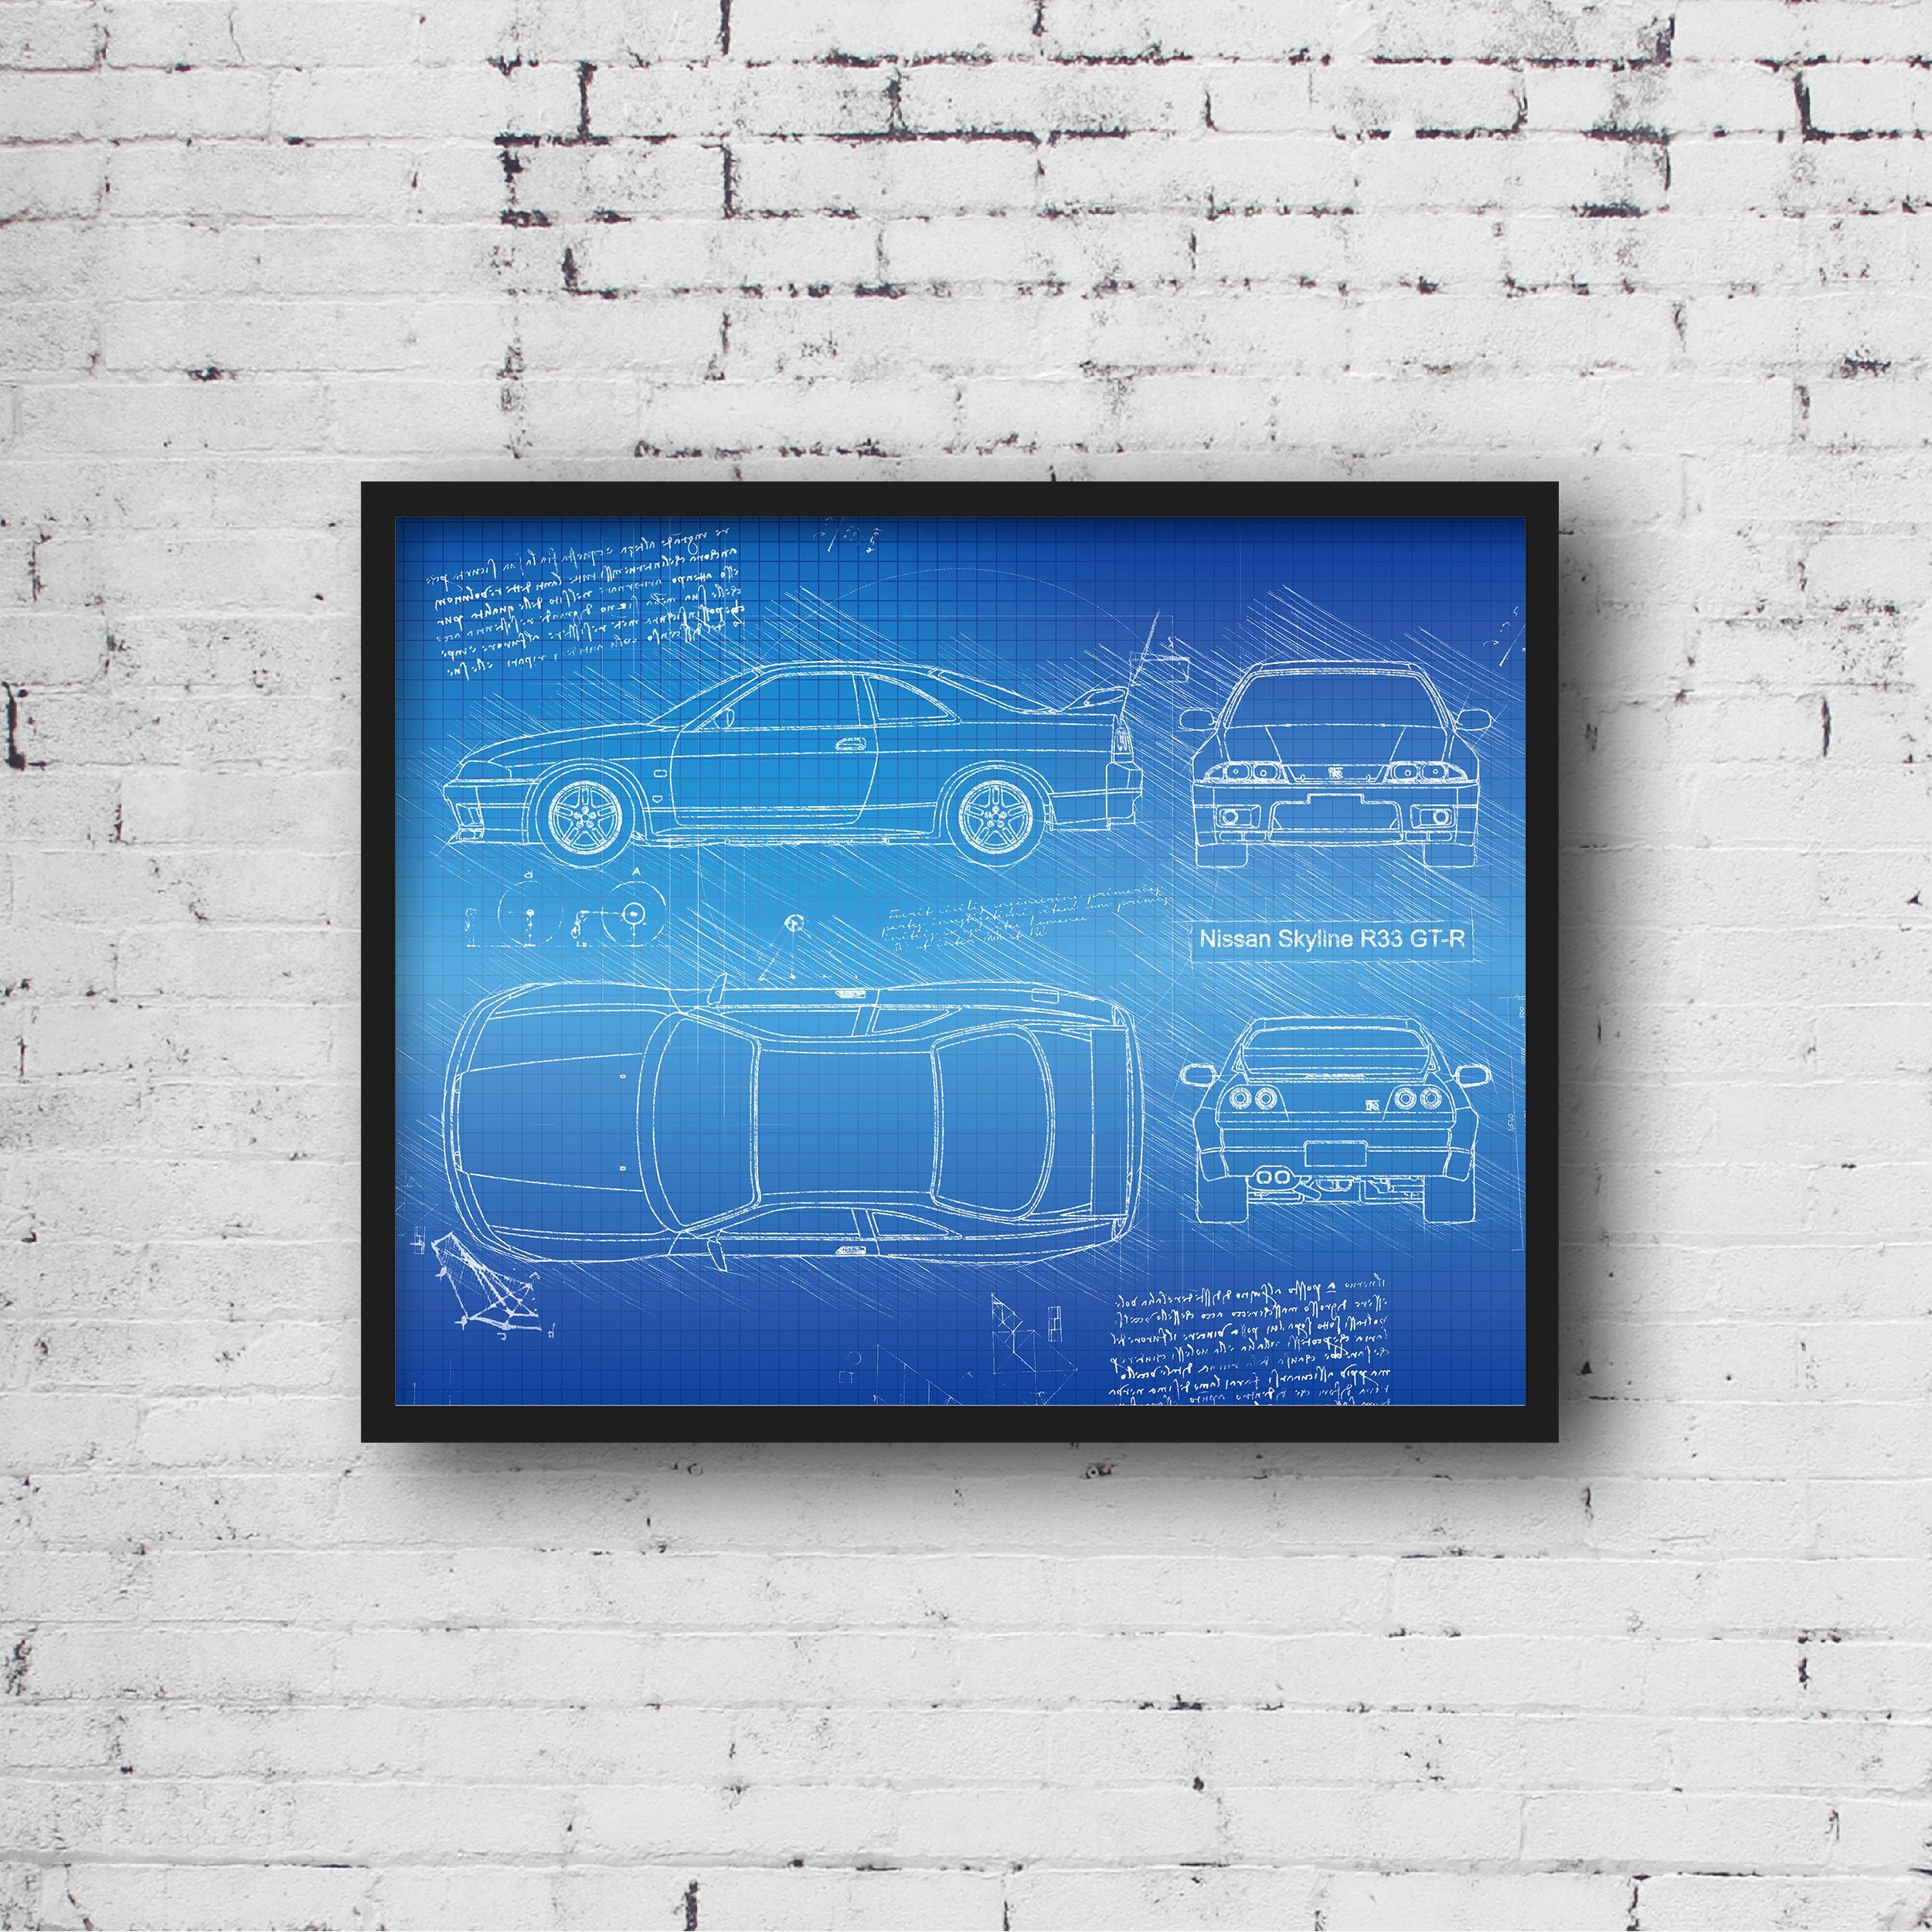 Nissan GT-R Vision Skyline Concept Poster Print